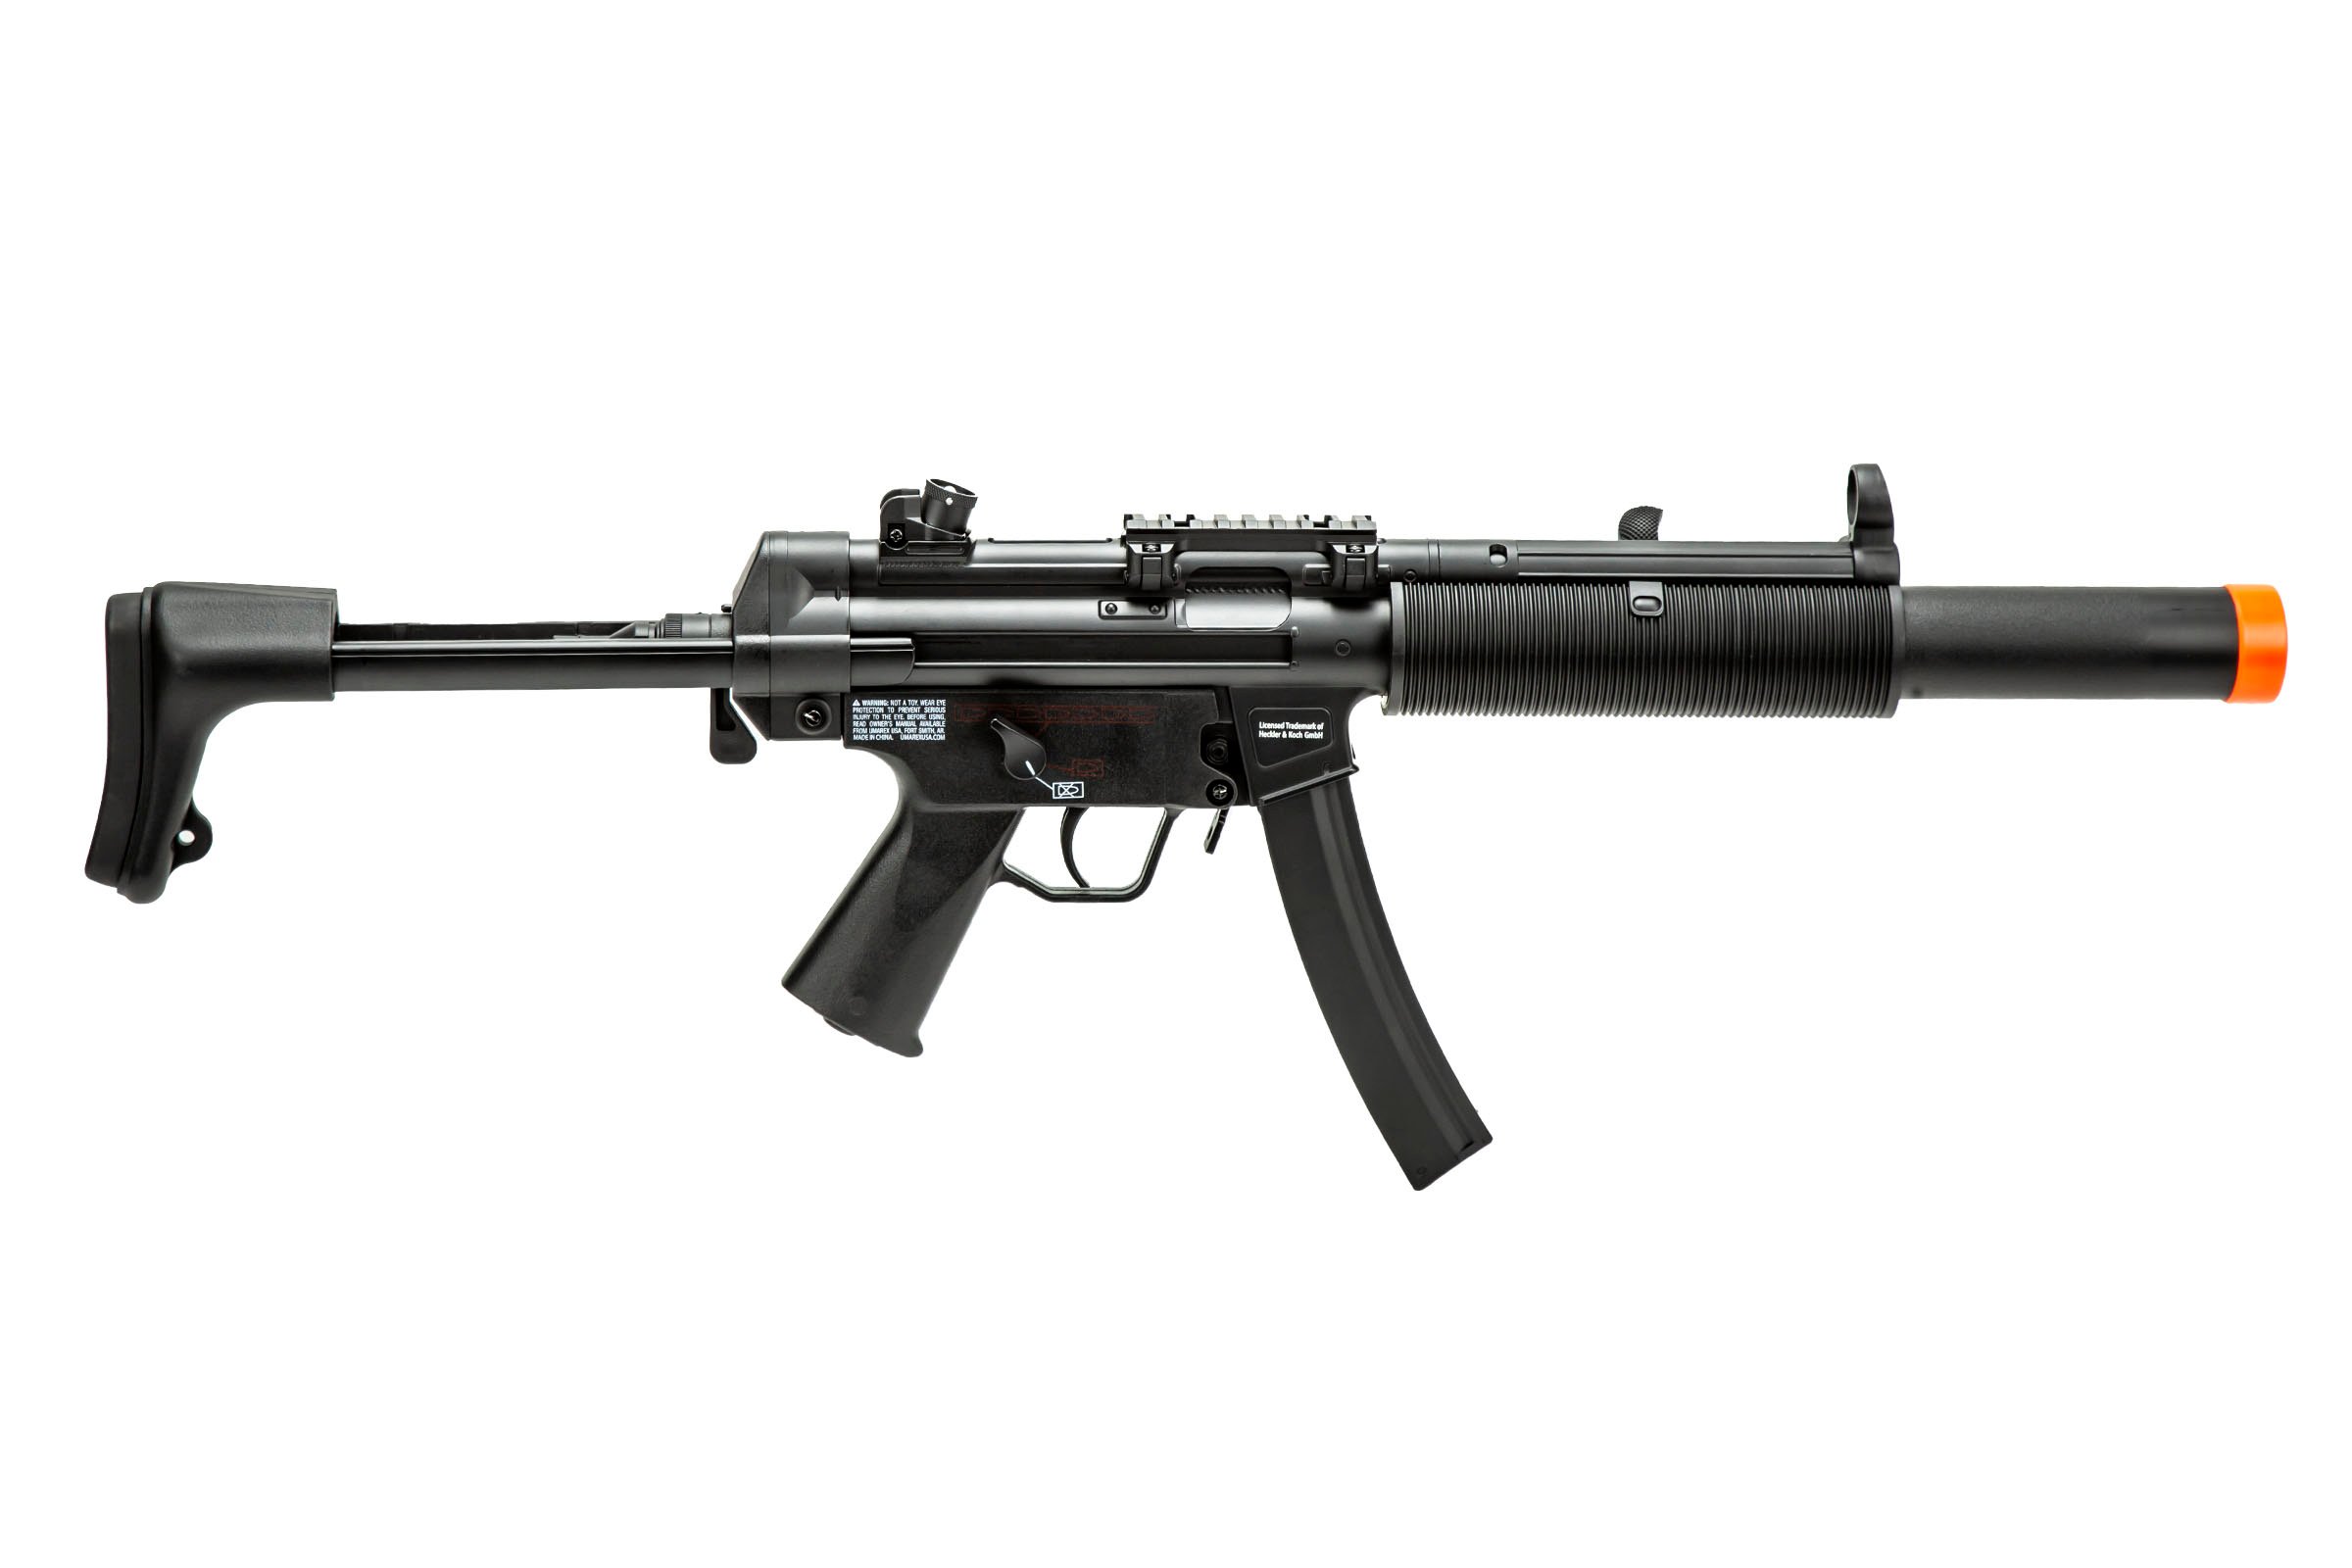 ELITE MP5 SD6 METAL UPPER GUN